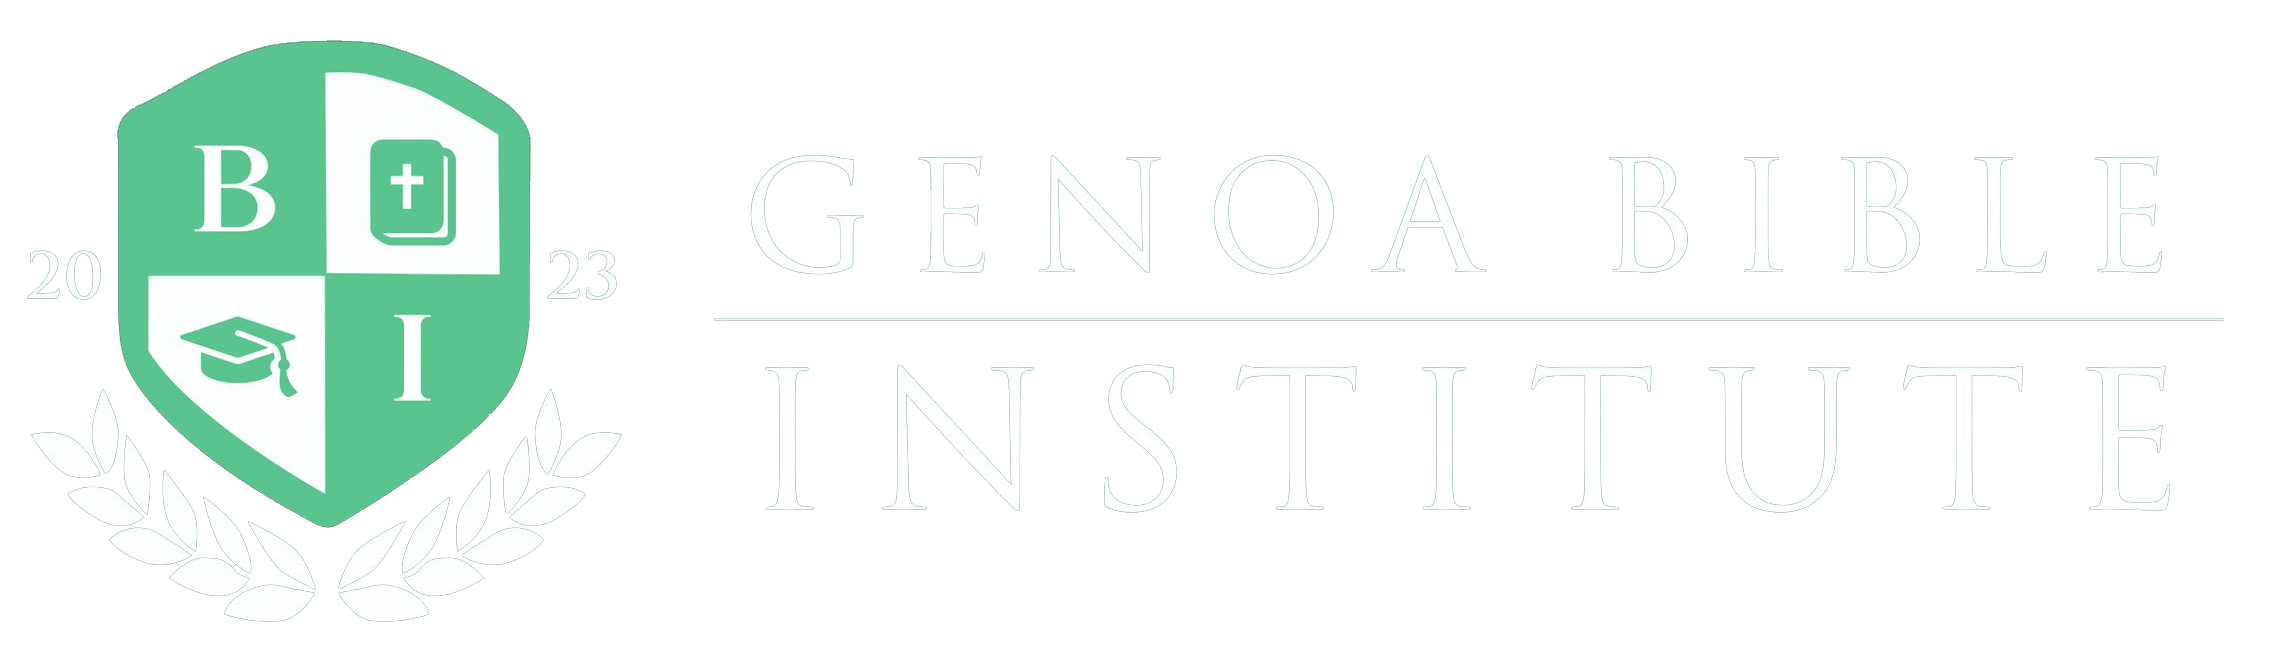 Genoa+Bible+Institute+logo-iso.png